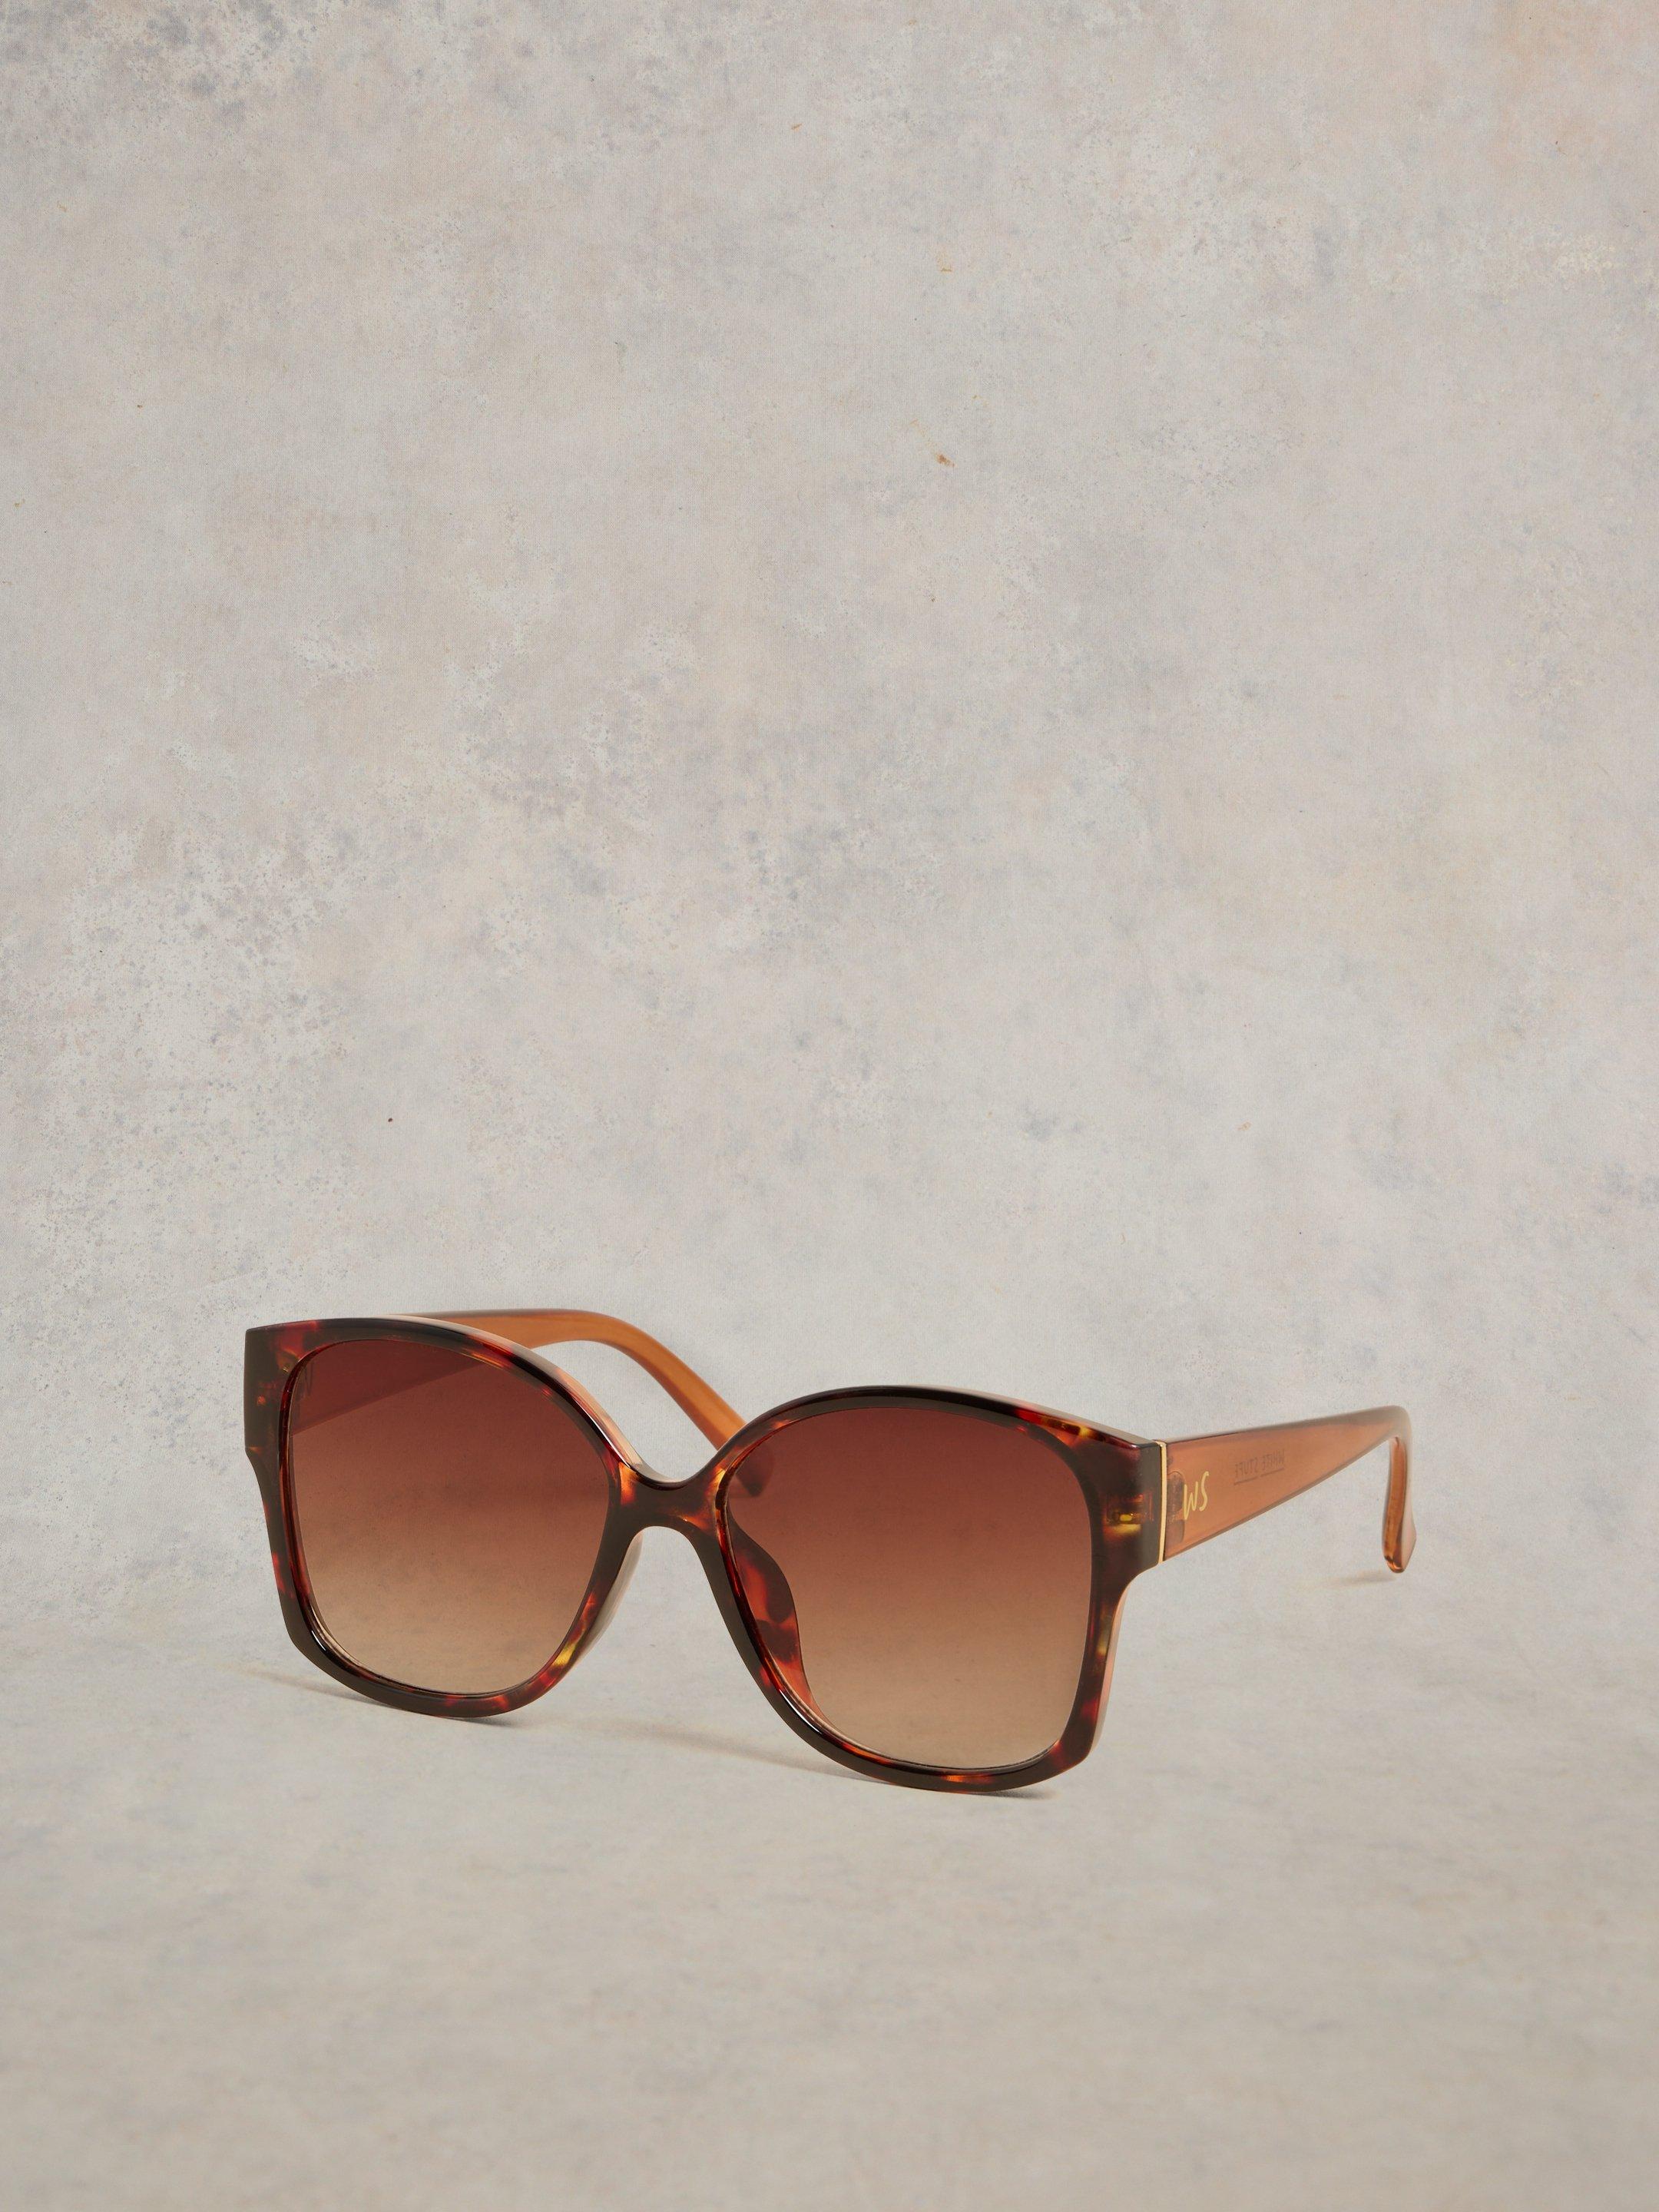 Dee Angled Cateye Sunglasses in ORANGE MLT - LIFESTYLE